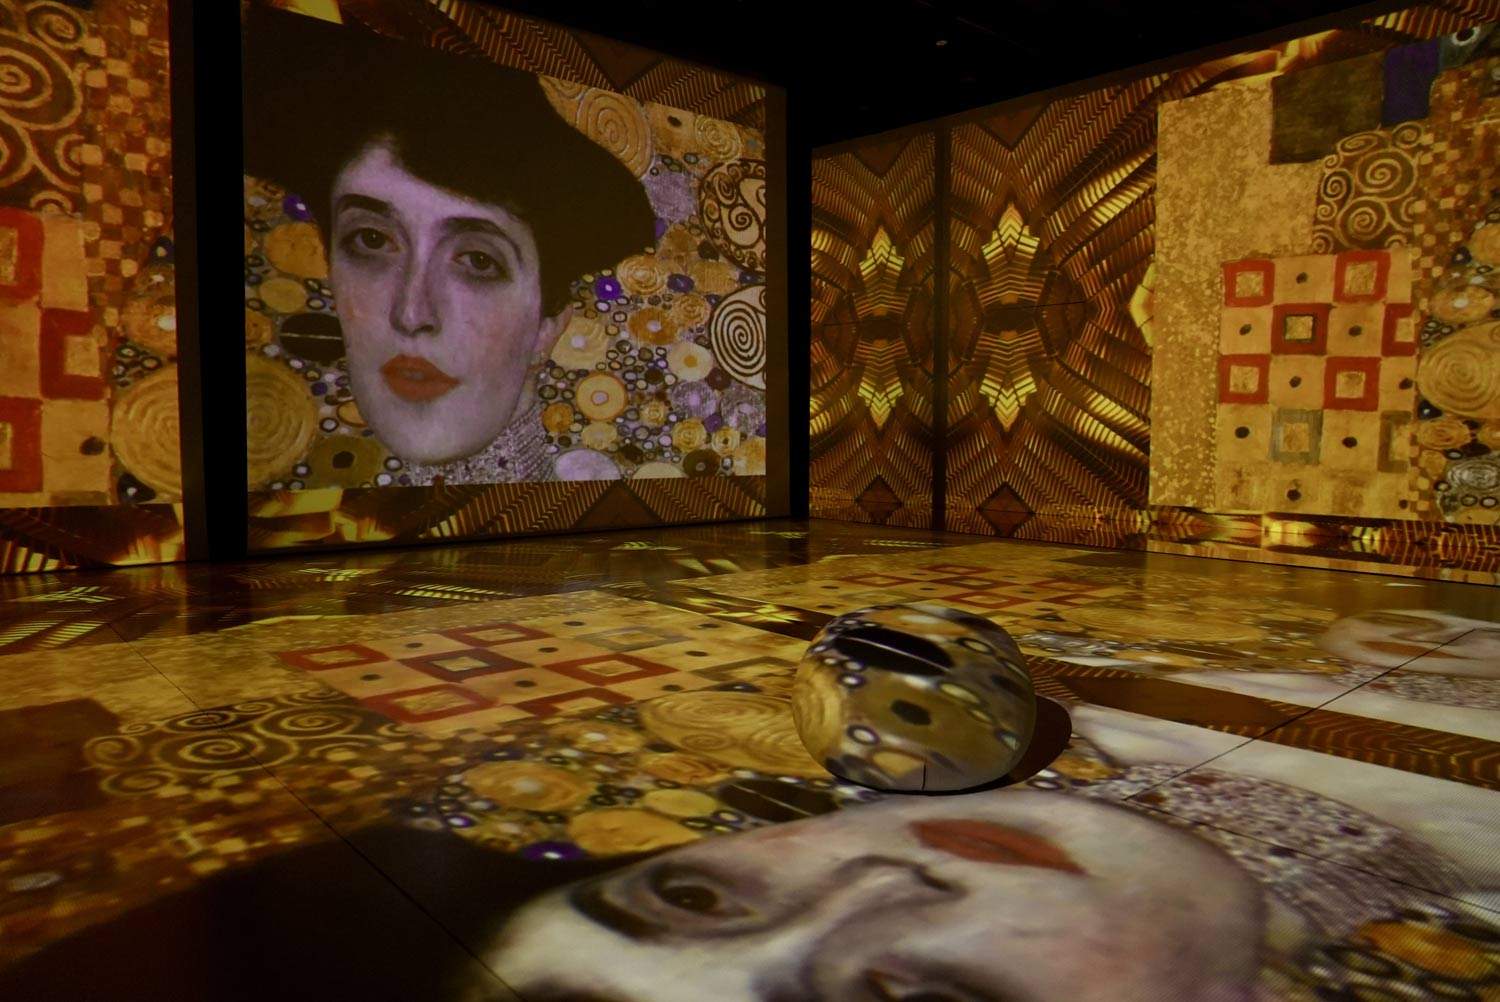 Gorizia, an immersive, multisensory exhibition on Gustav Klimt at EmotionHall